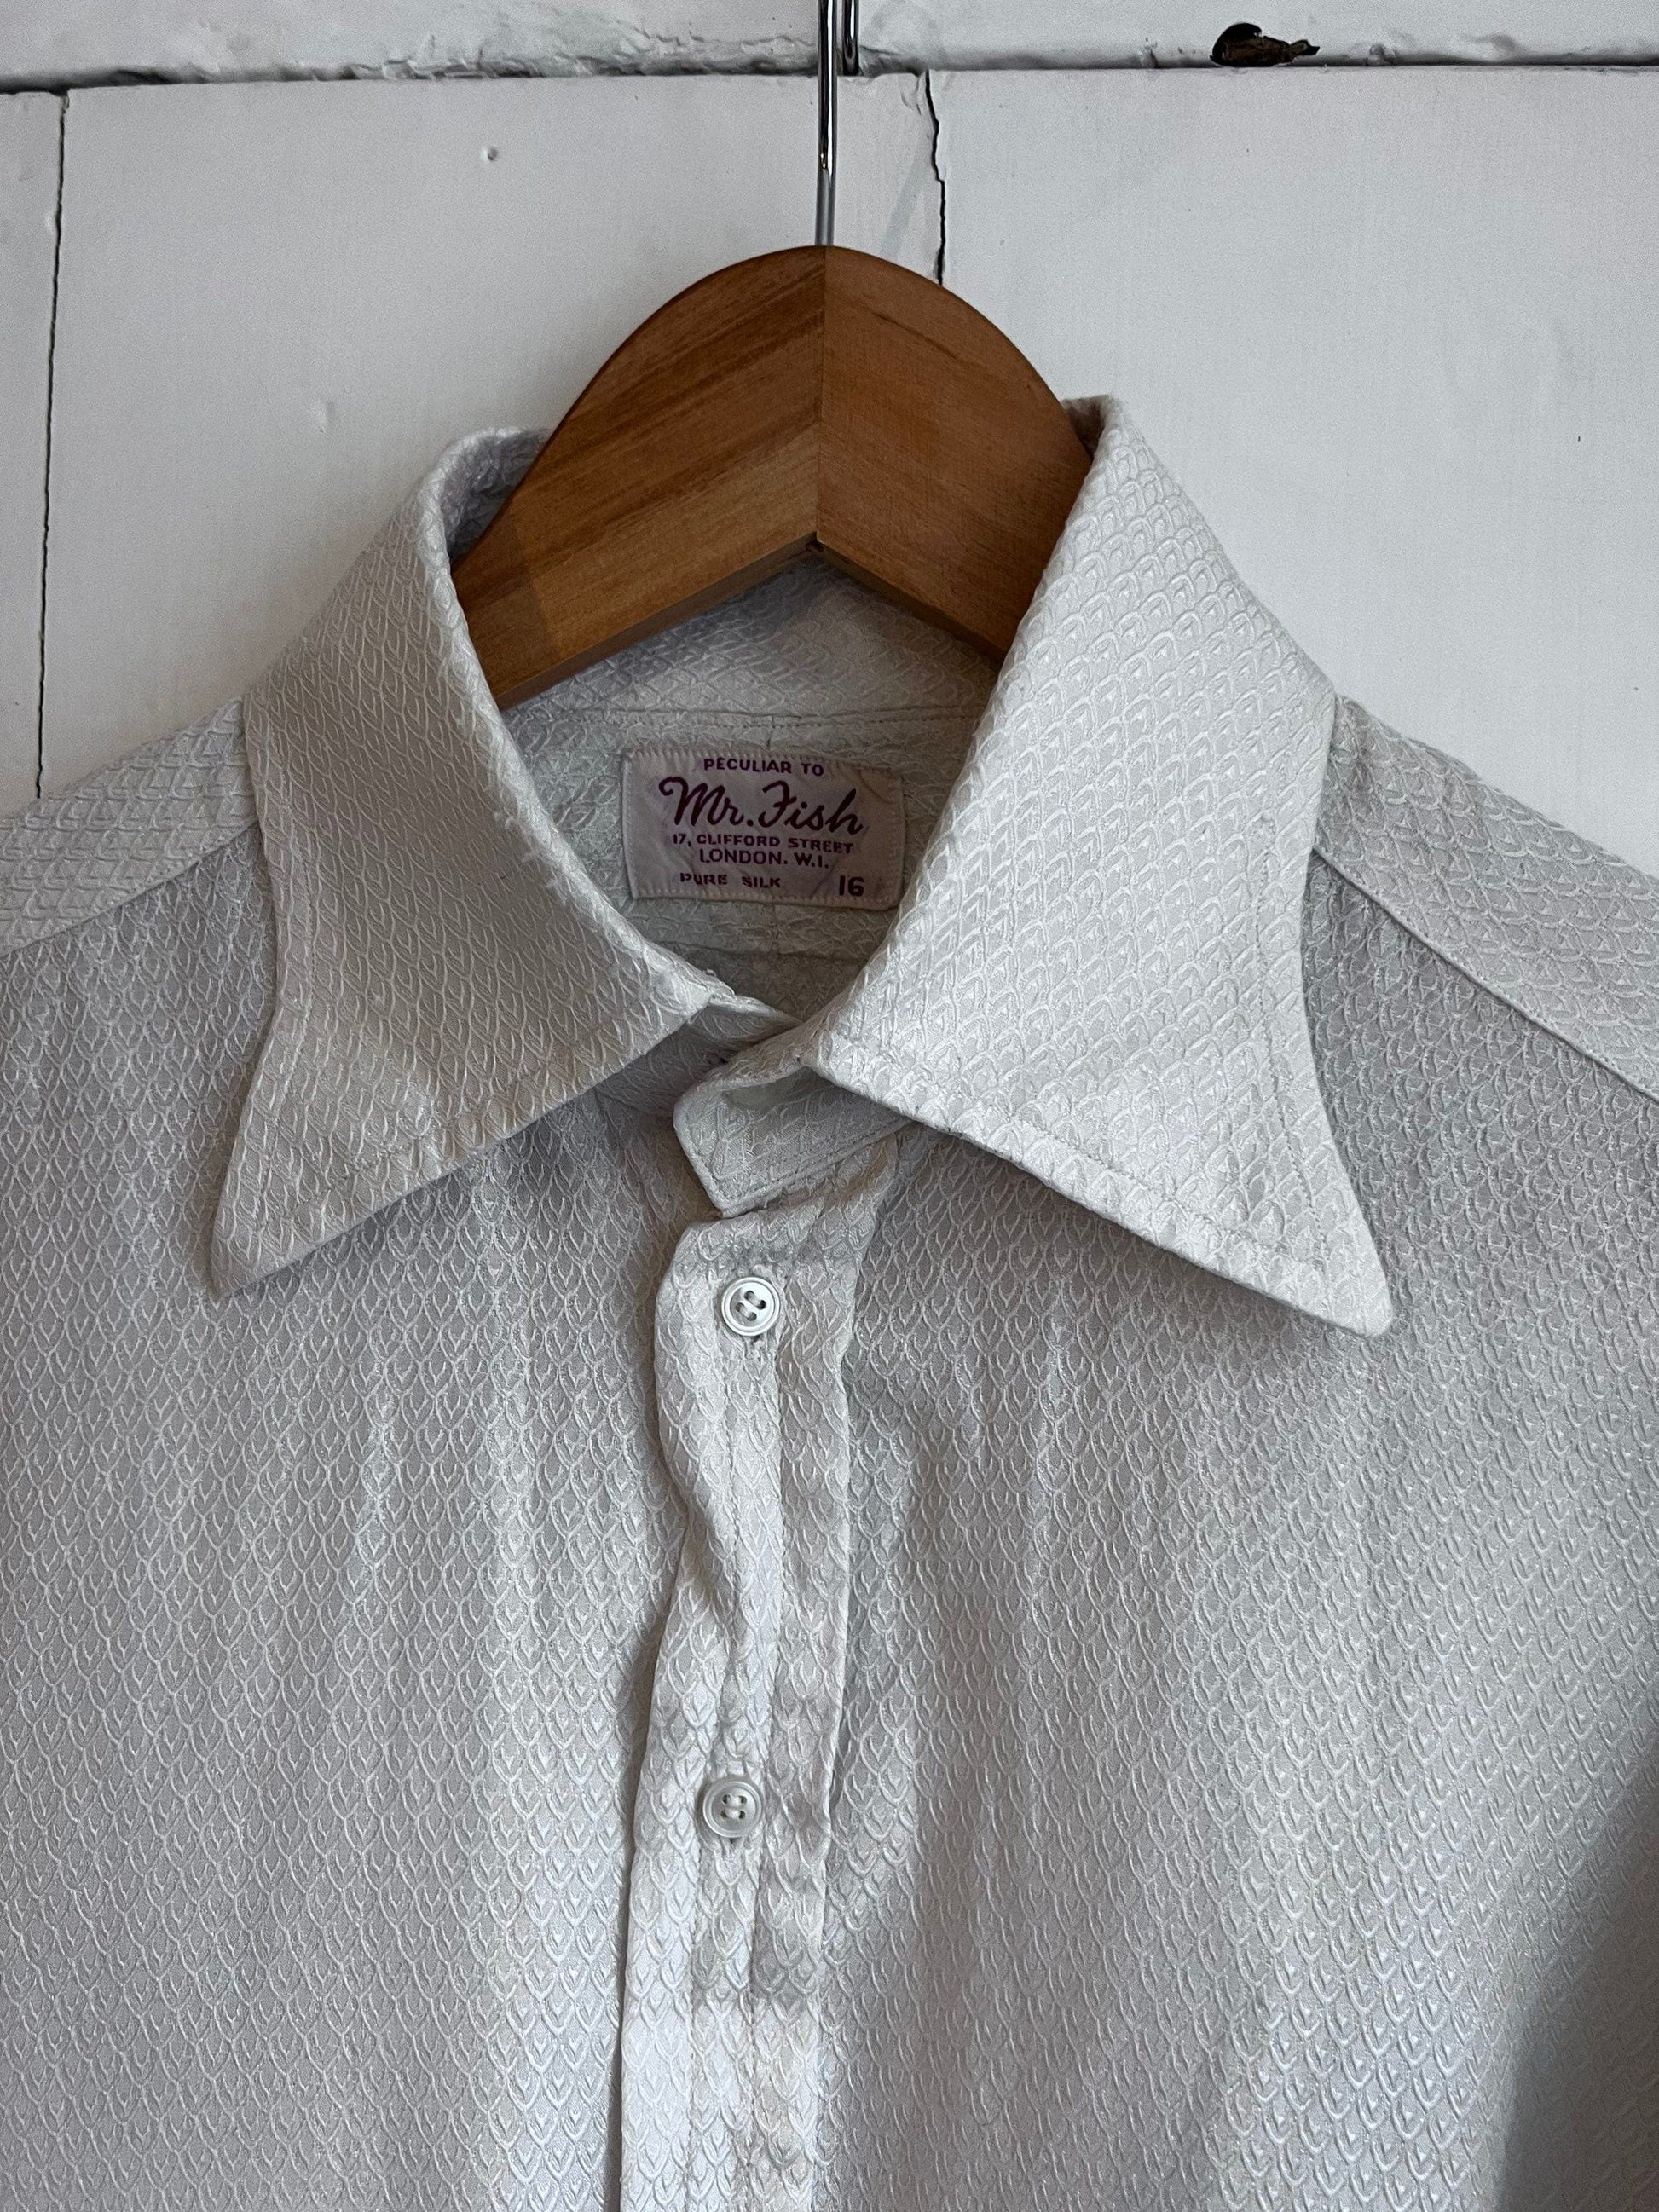 Mens 1960s Silk Shirt Cream Button Down ,Peculiar to Mr Fish, Mens Vintage Silk Shirt, 60s,Peacock Revolution, British Designer, double Cuff